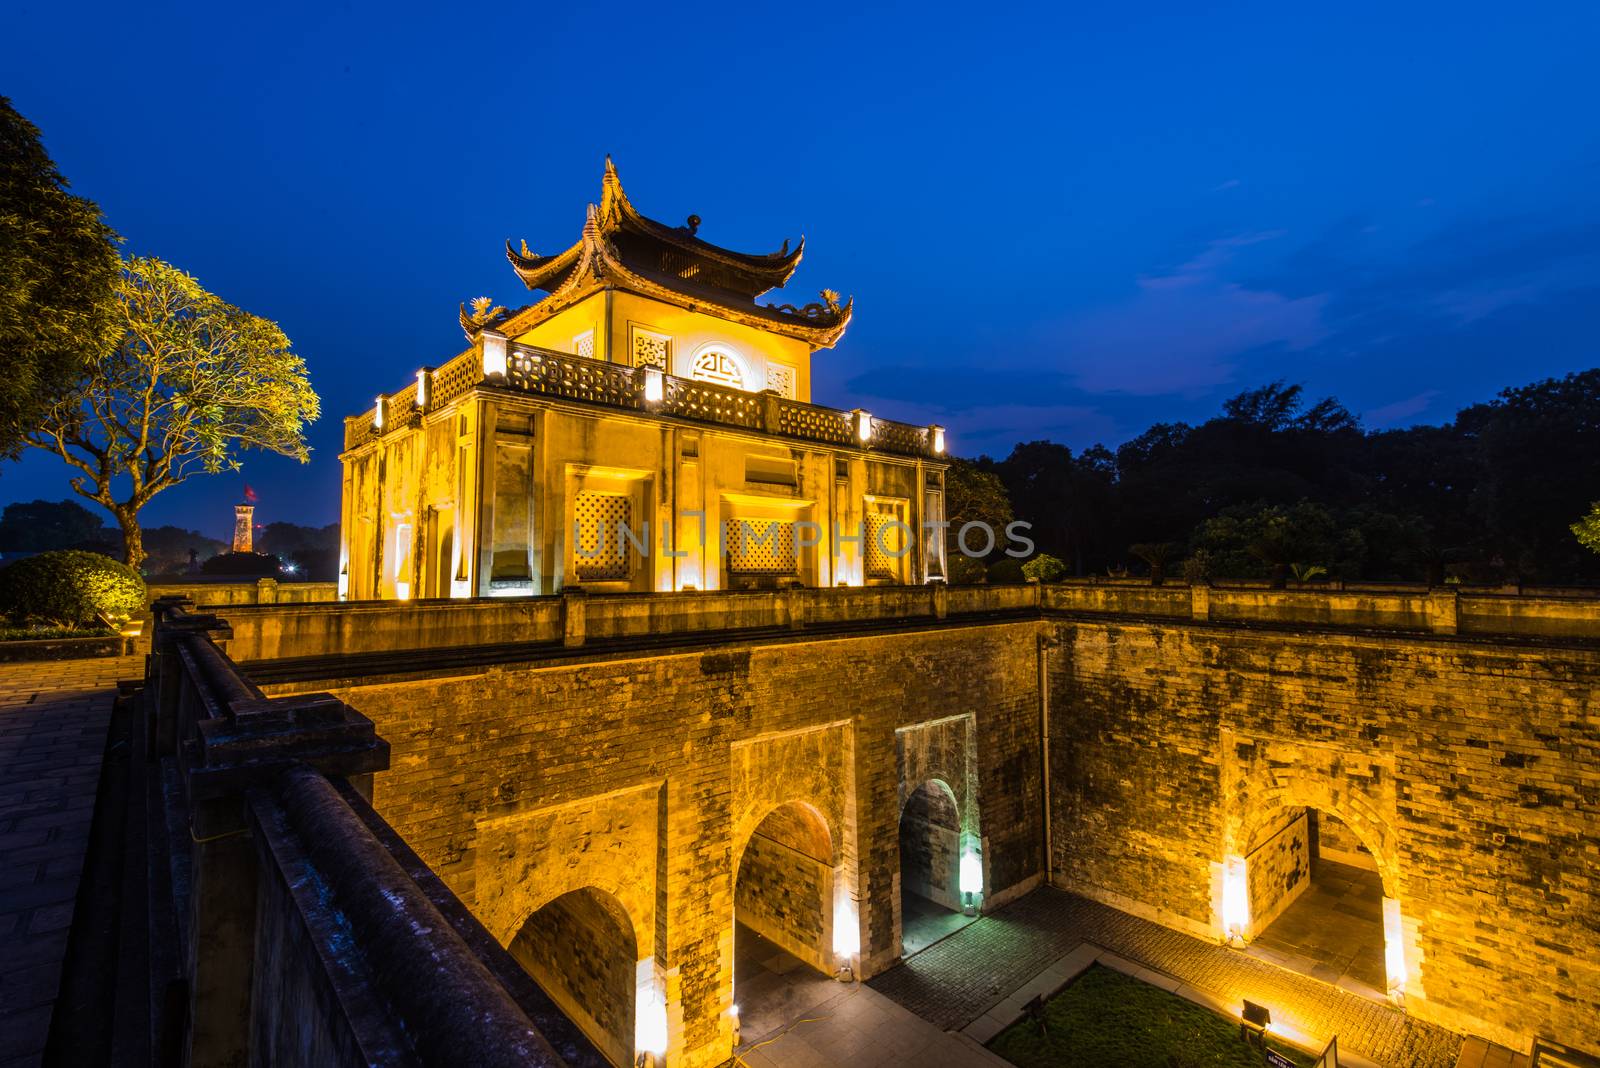 Imperial Citadel of Hanoi by trocphunc